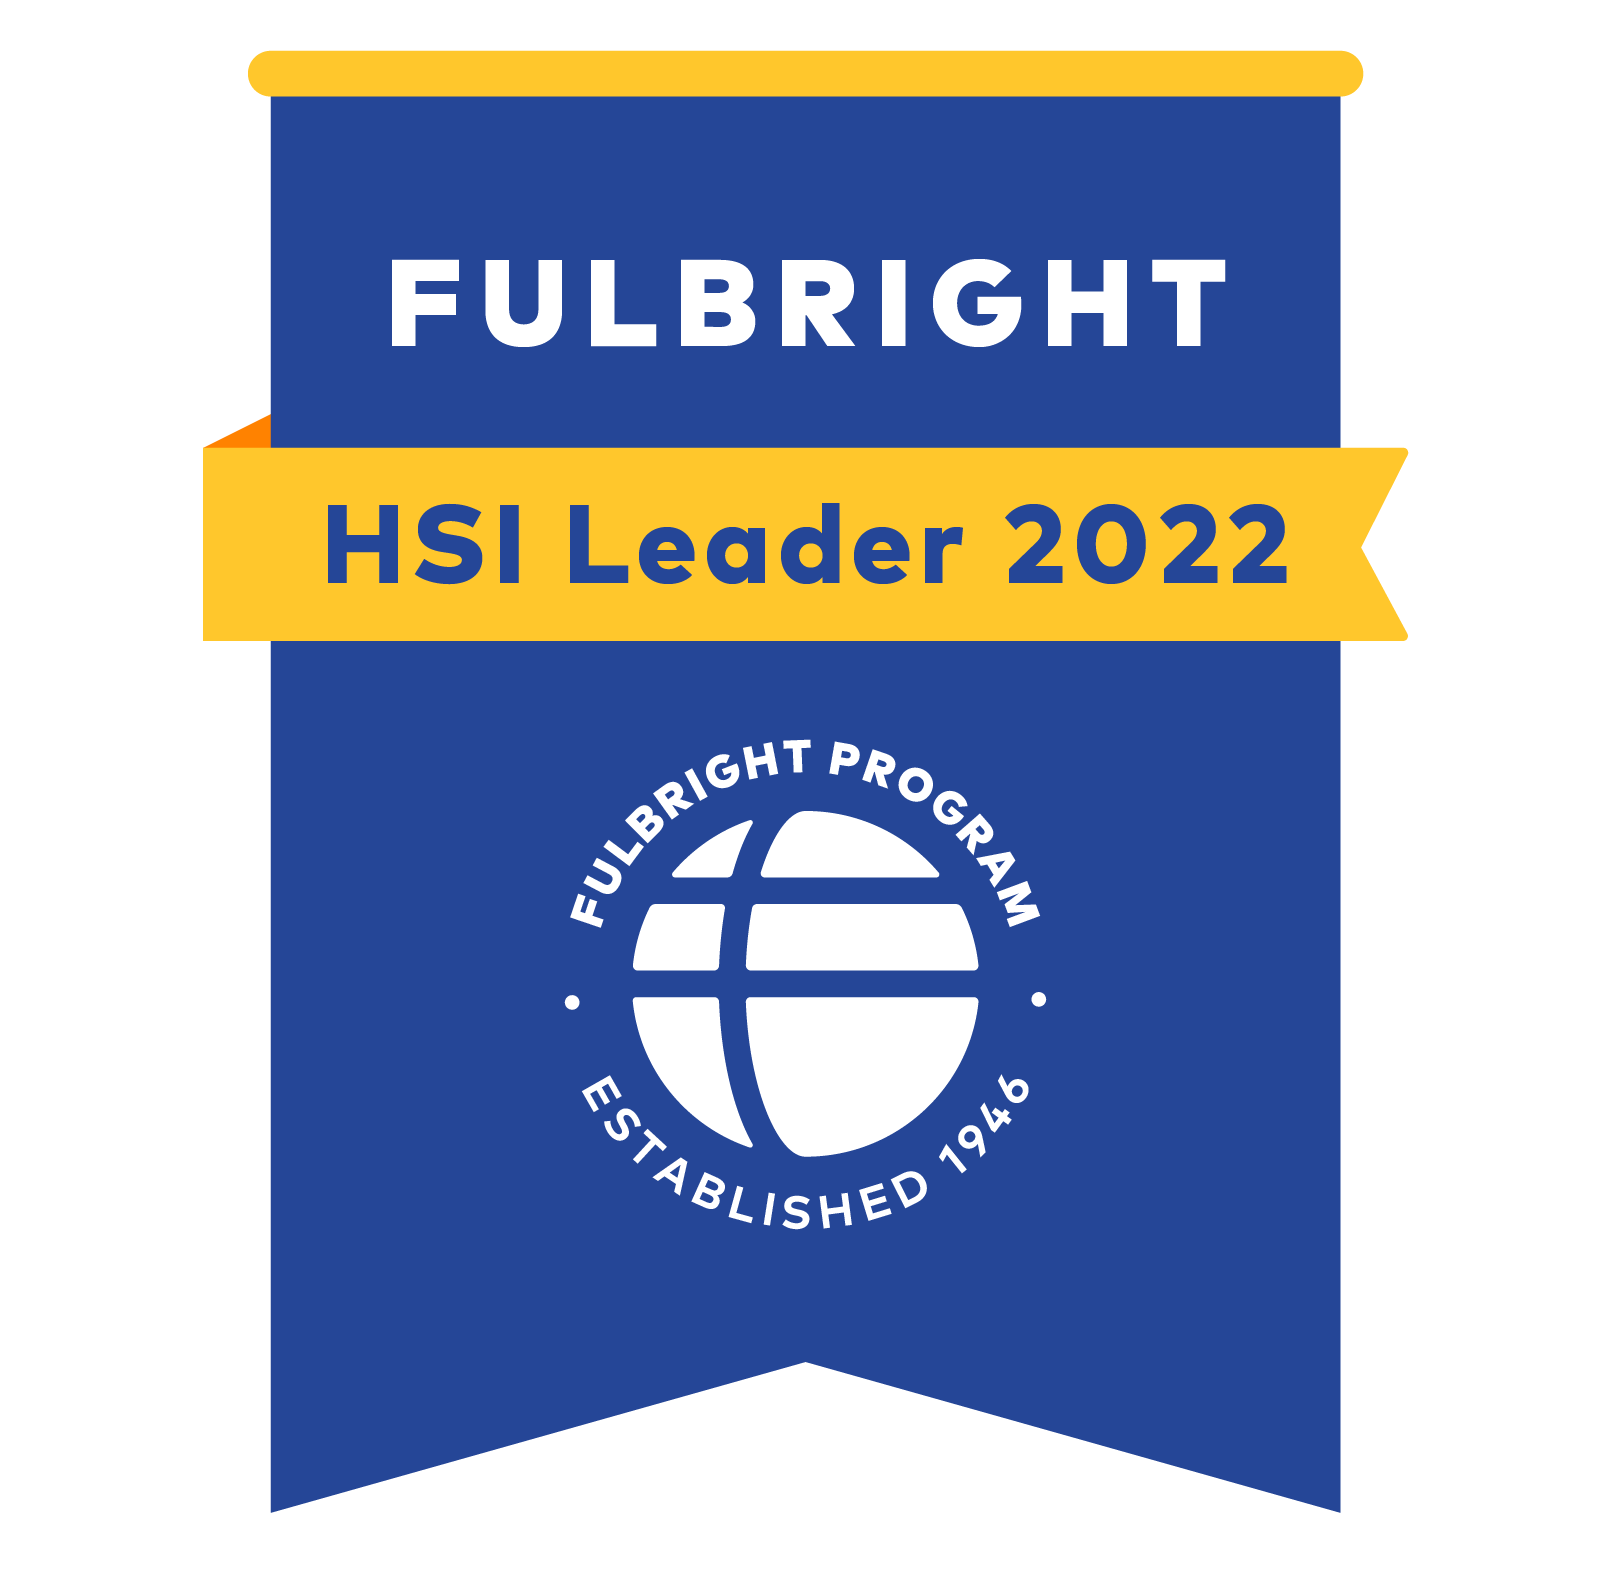 Texas Tech University Named 2022 HSI Leader by Fulbright Program